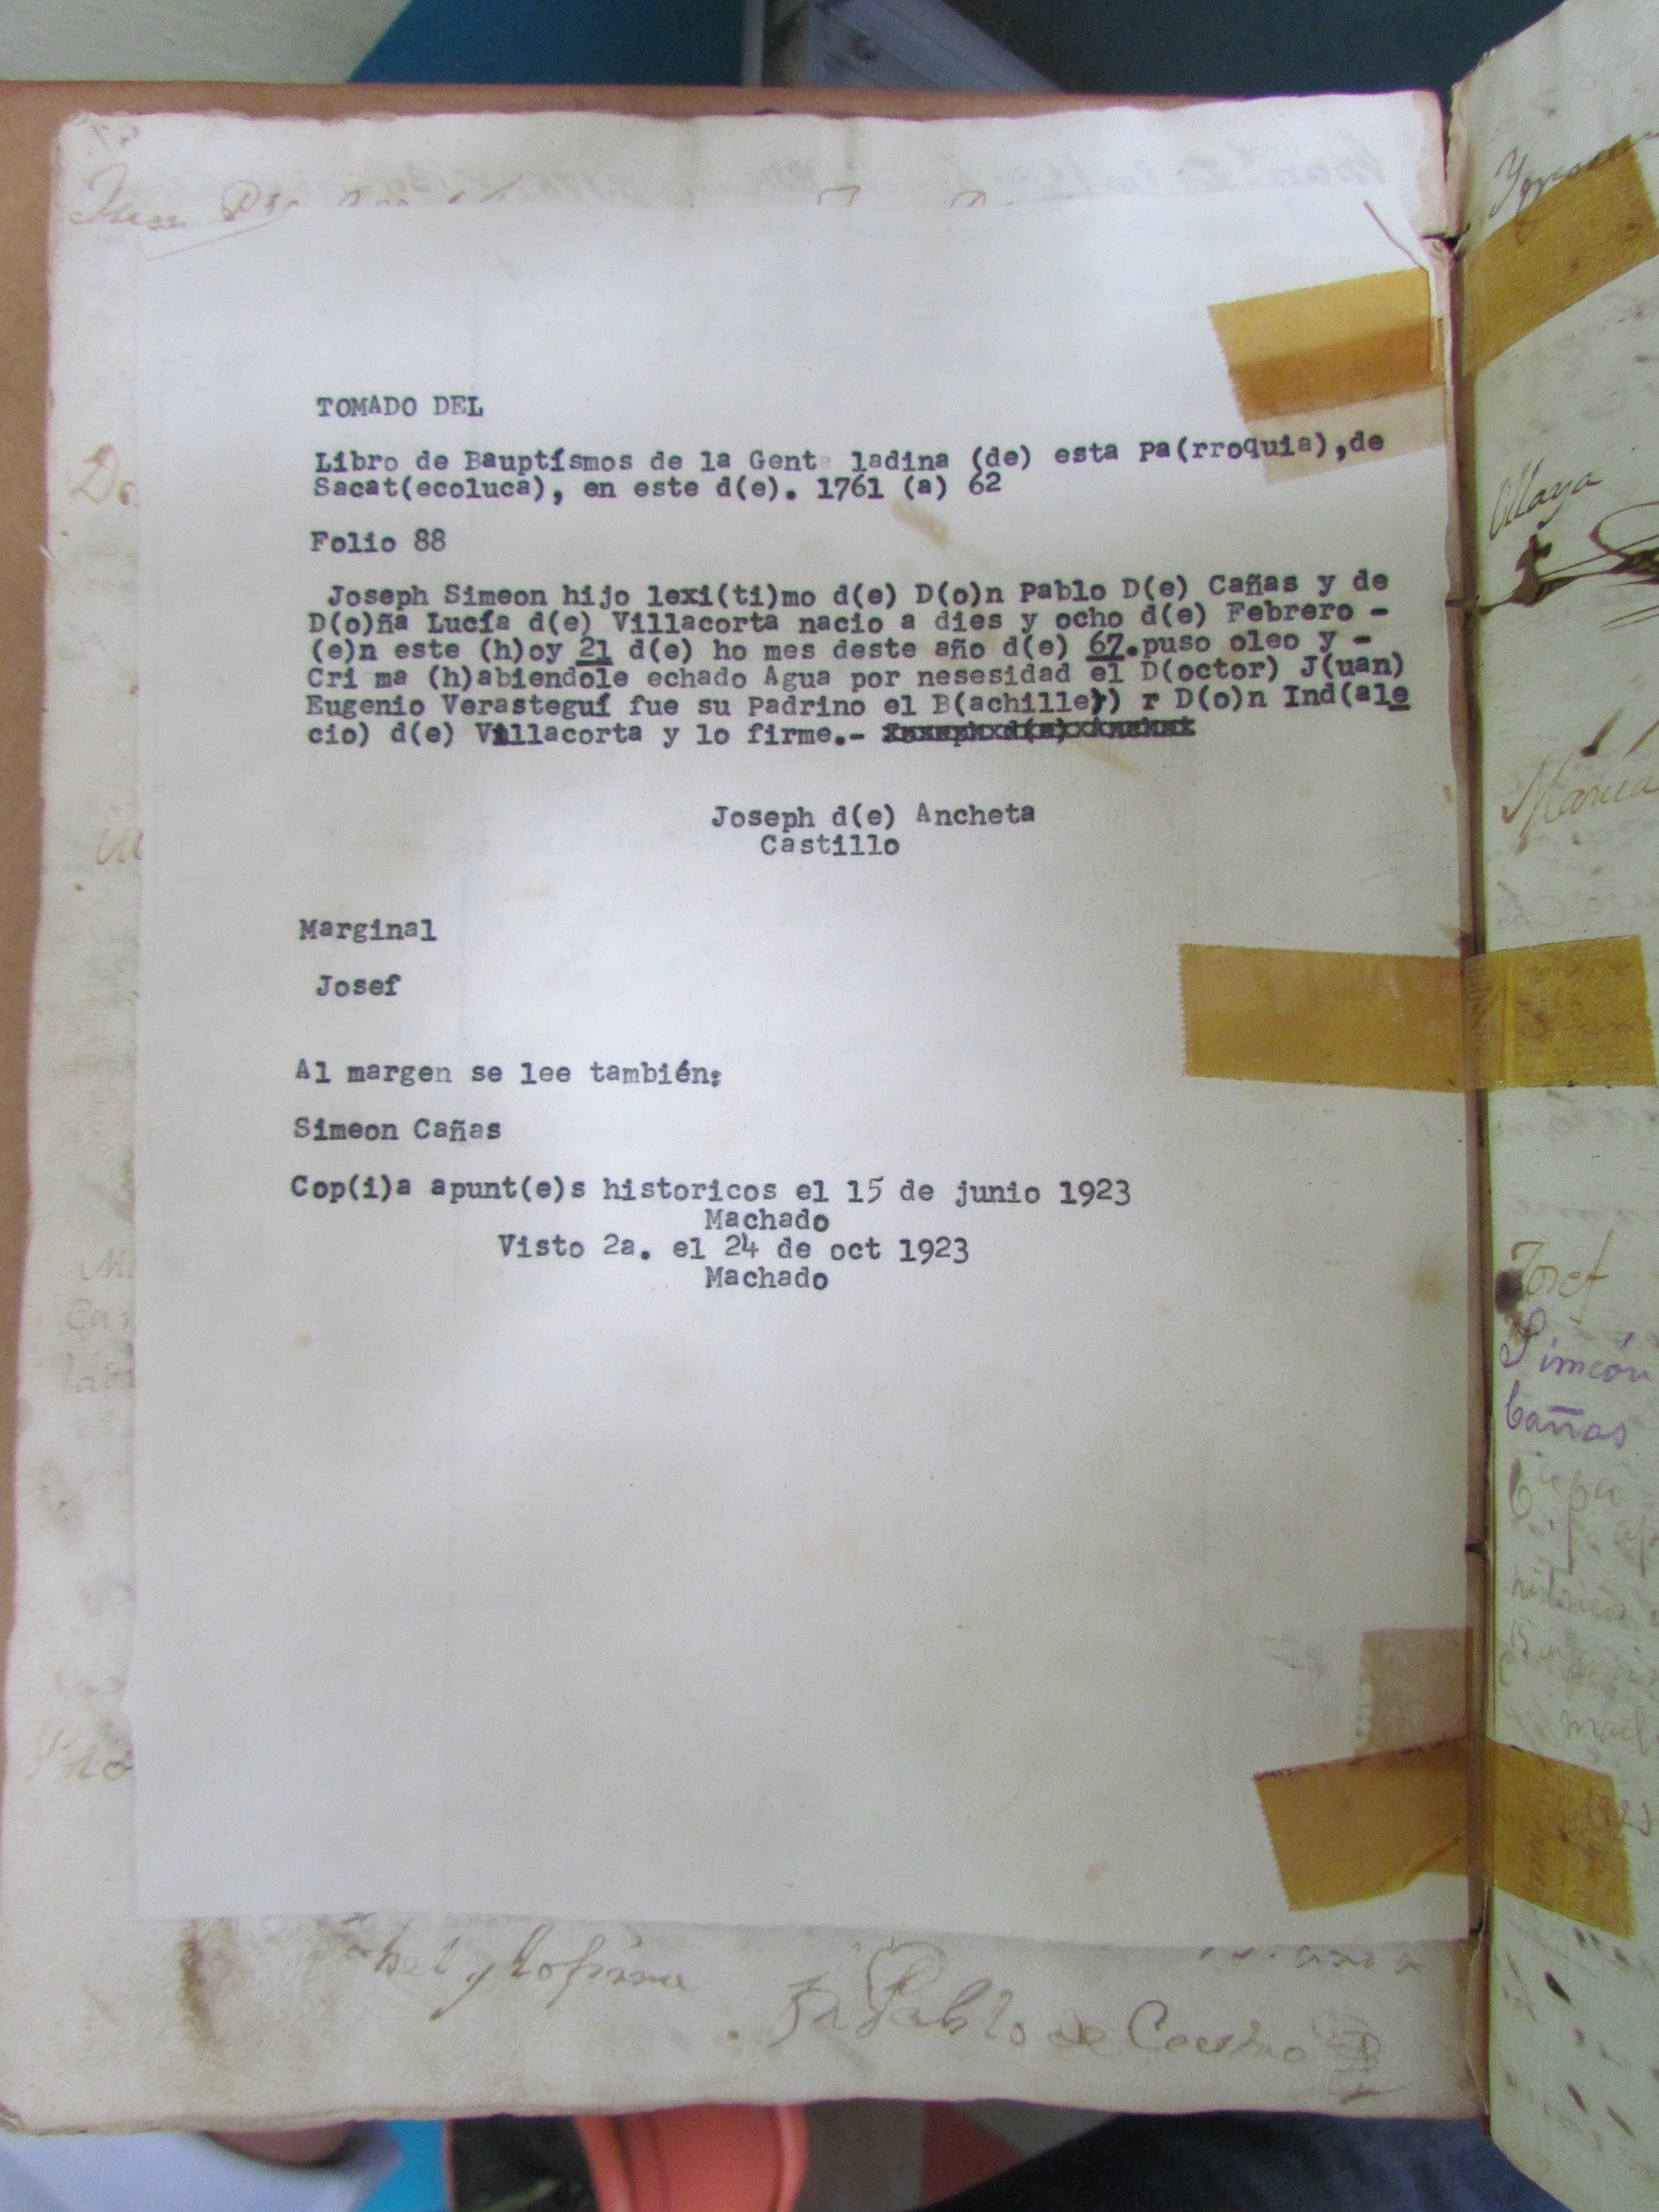 Zacatecoluca. Transcription of the baptism certificate of Jose Simeon Cañas. Photo: José Heriberto Erquicia